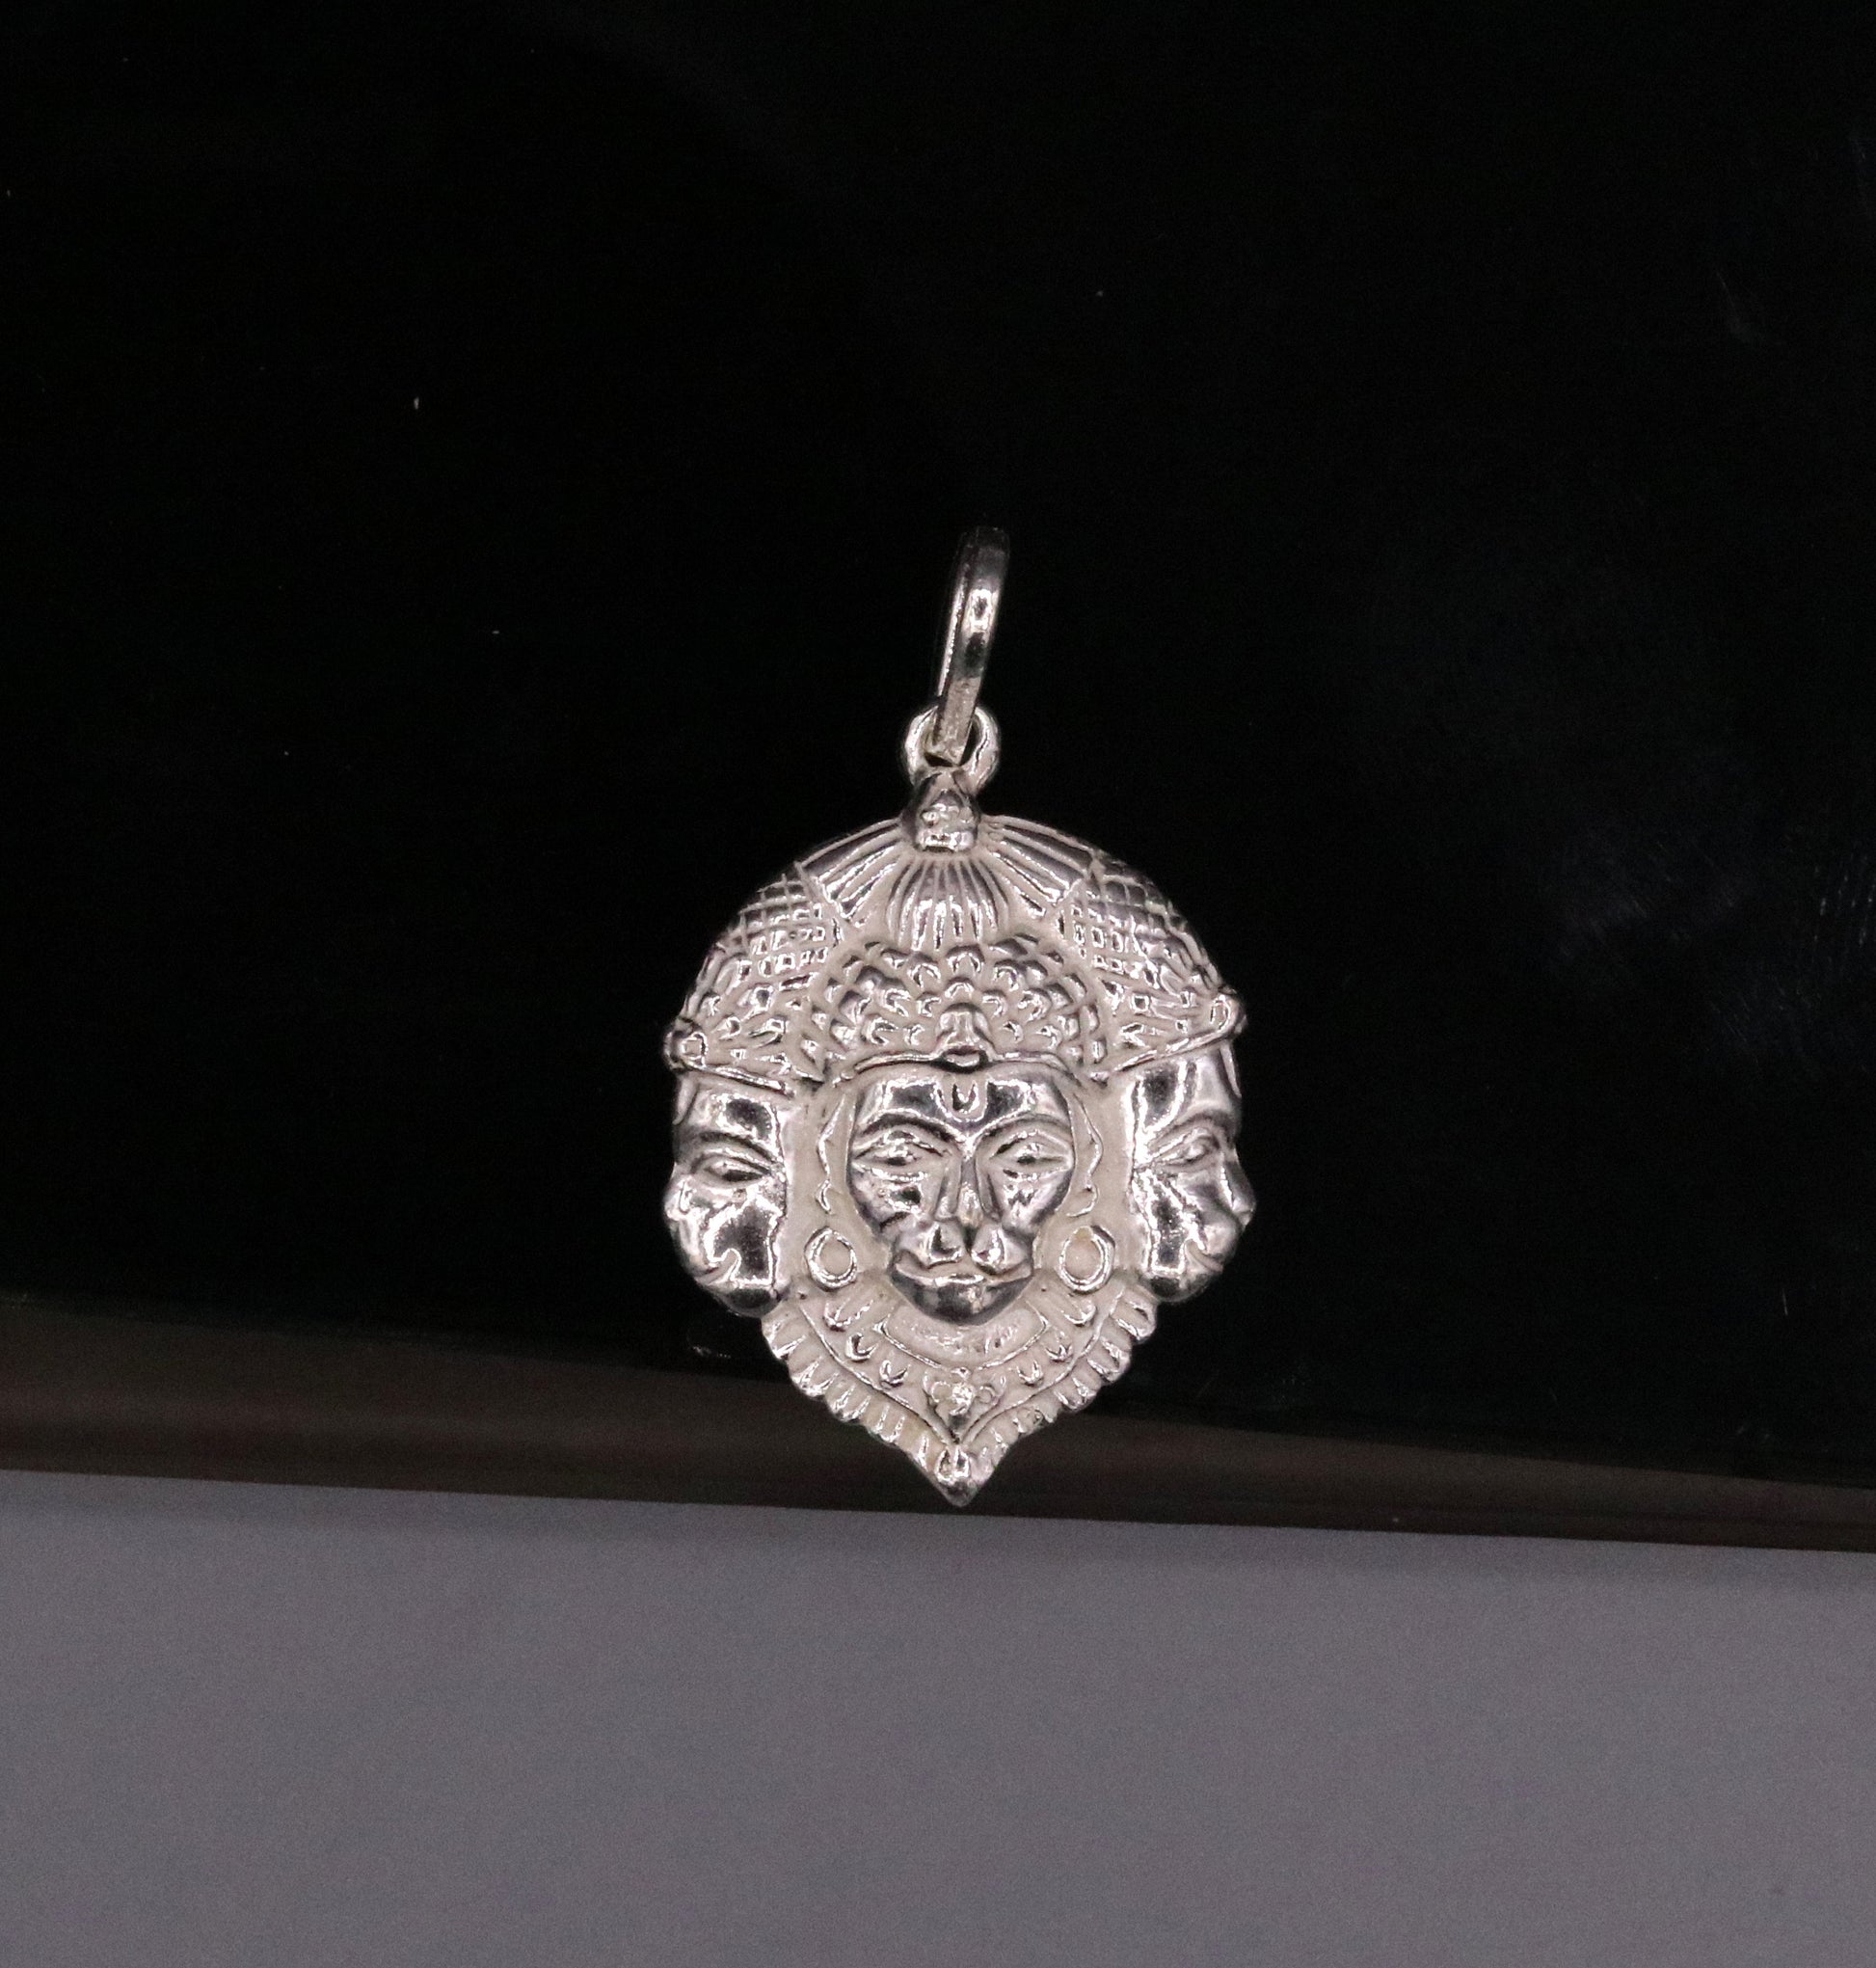 Solid silver handmade indian idol three face lord Hanumaan Bajarang bali pendant from rajasthan India god pendant locket jewelry snp02 - TRIBAL ORNAMENTS